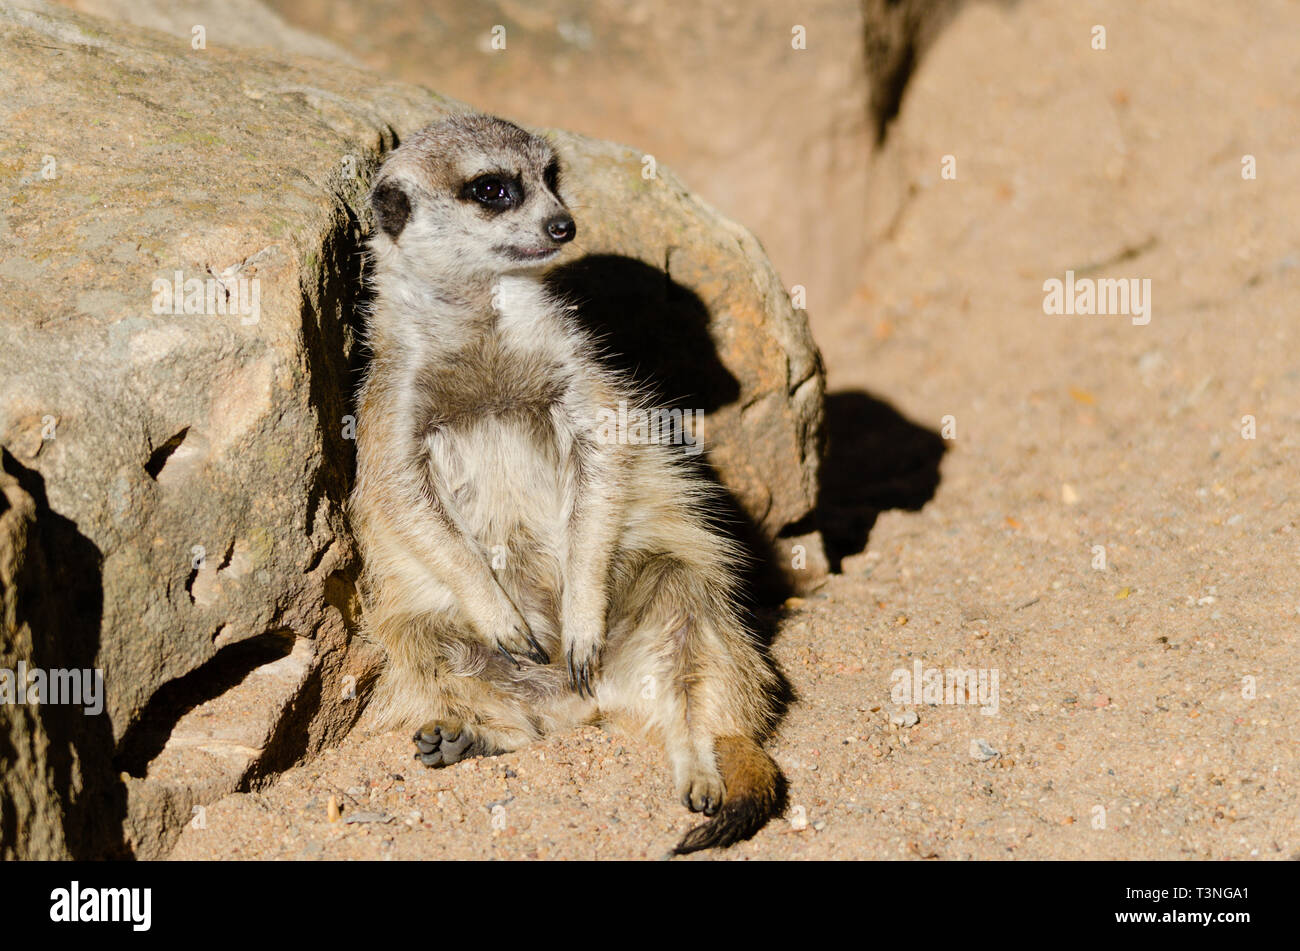 Single Meerkat (Suricata suricattaor) sitting and leaning against a rock Stock Photo